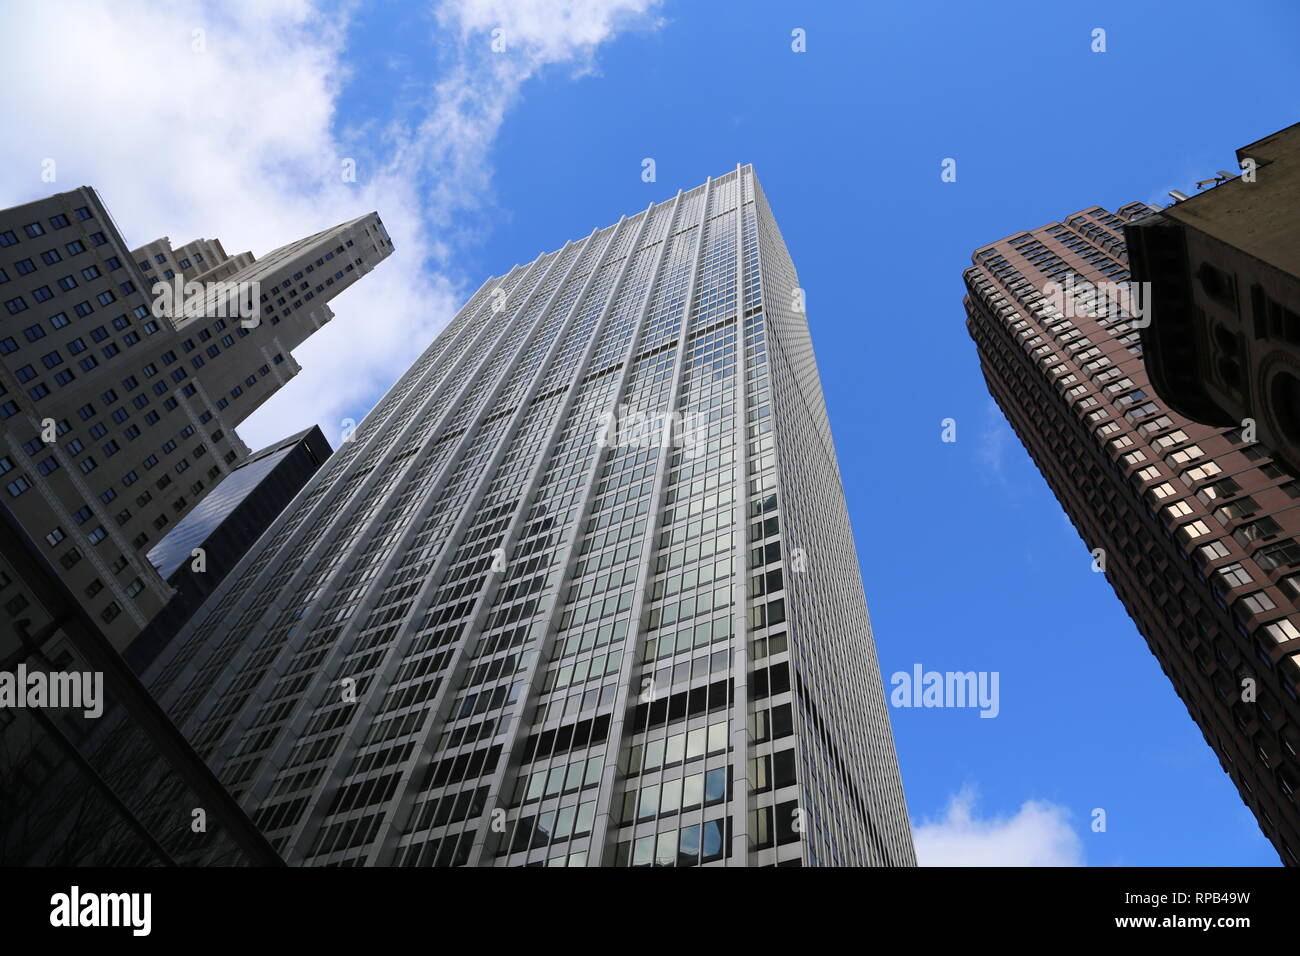 United States. New York city. Skyscrapers. Stock Photo